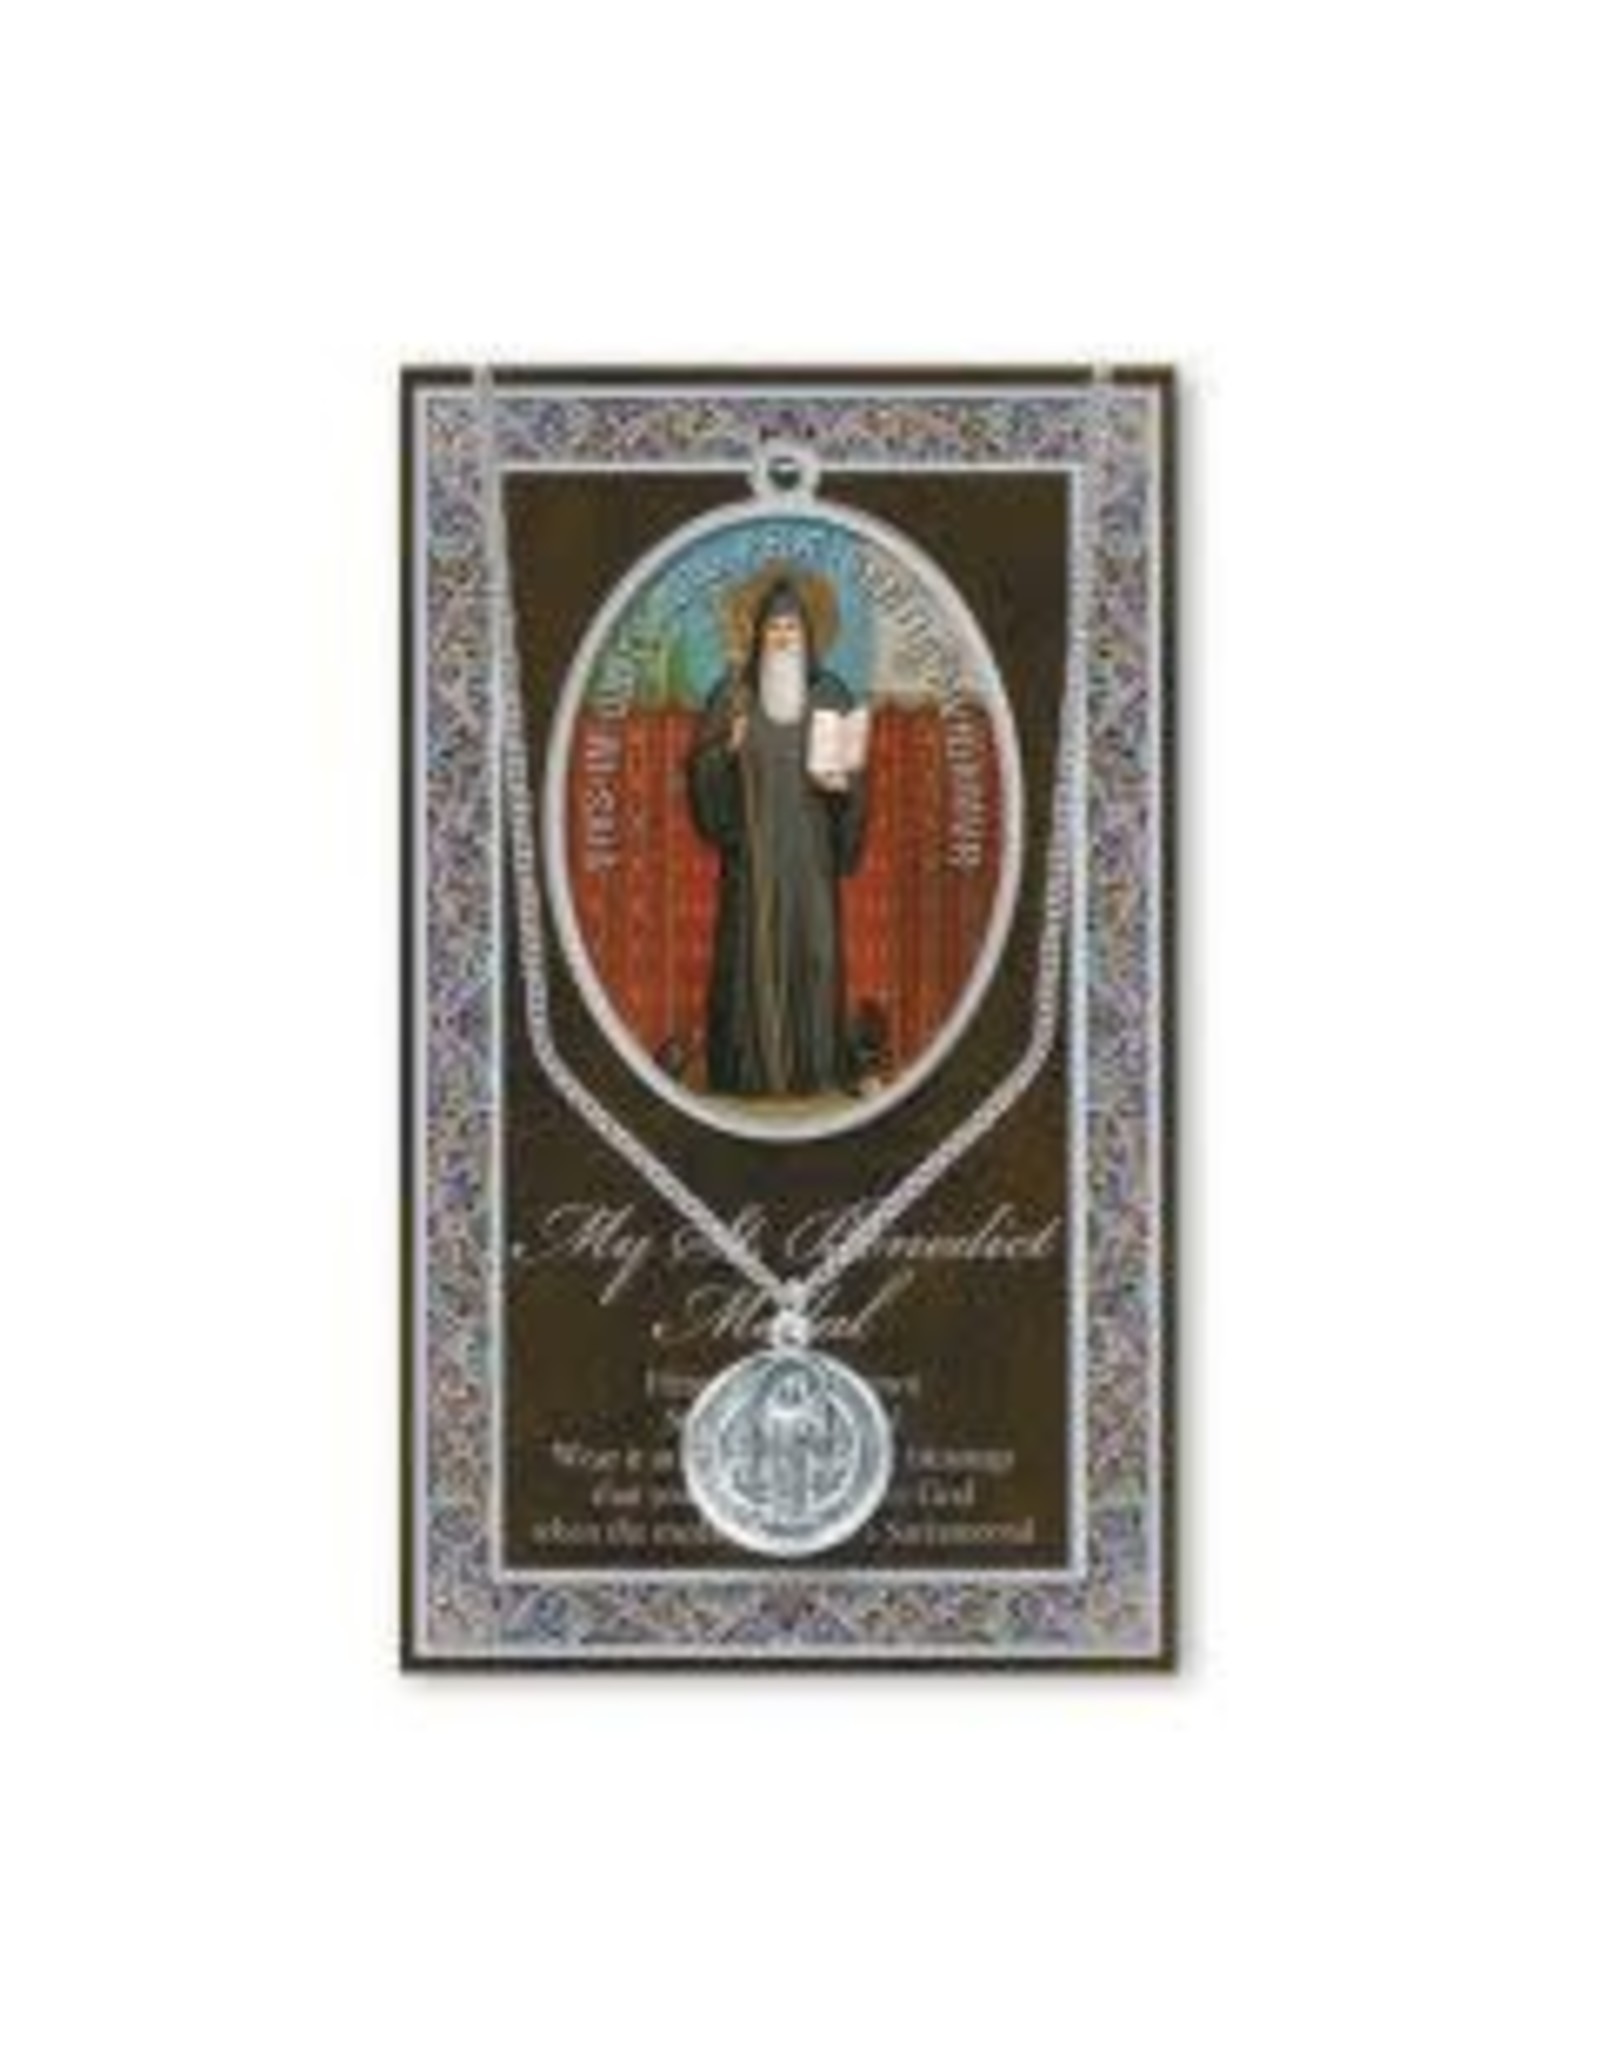 Hirten Saint Medal with Prayer Card - St. Benedict